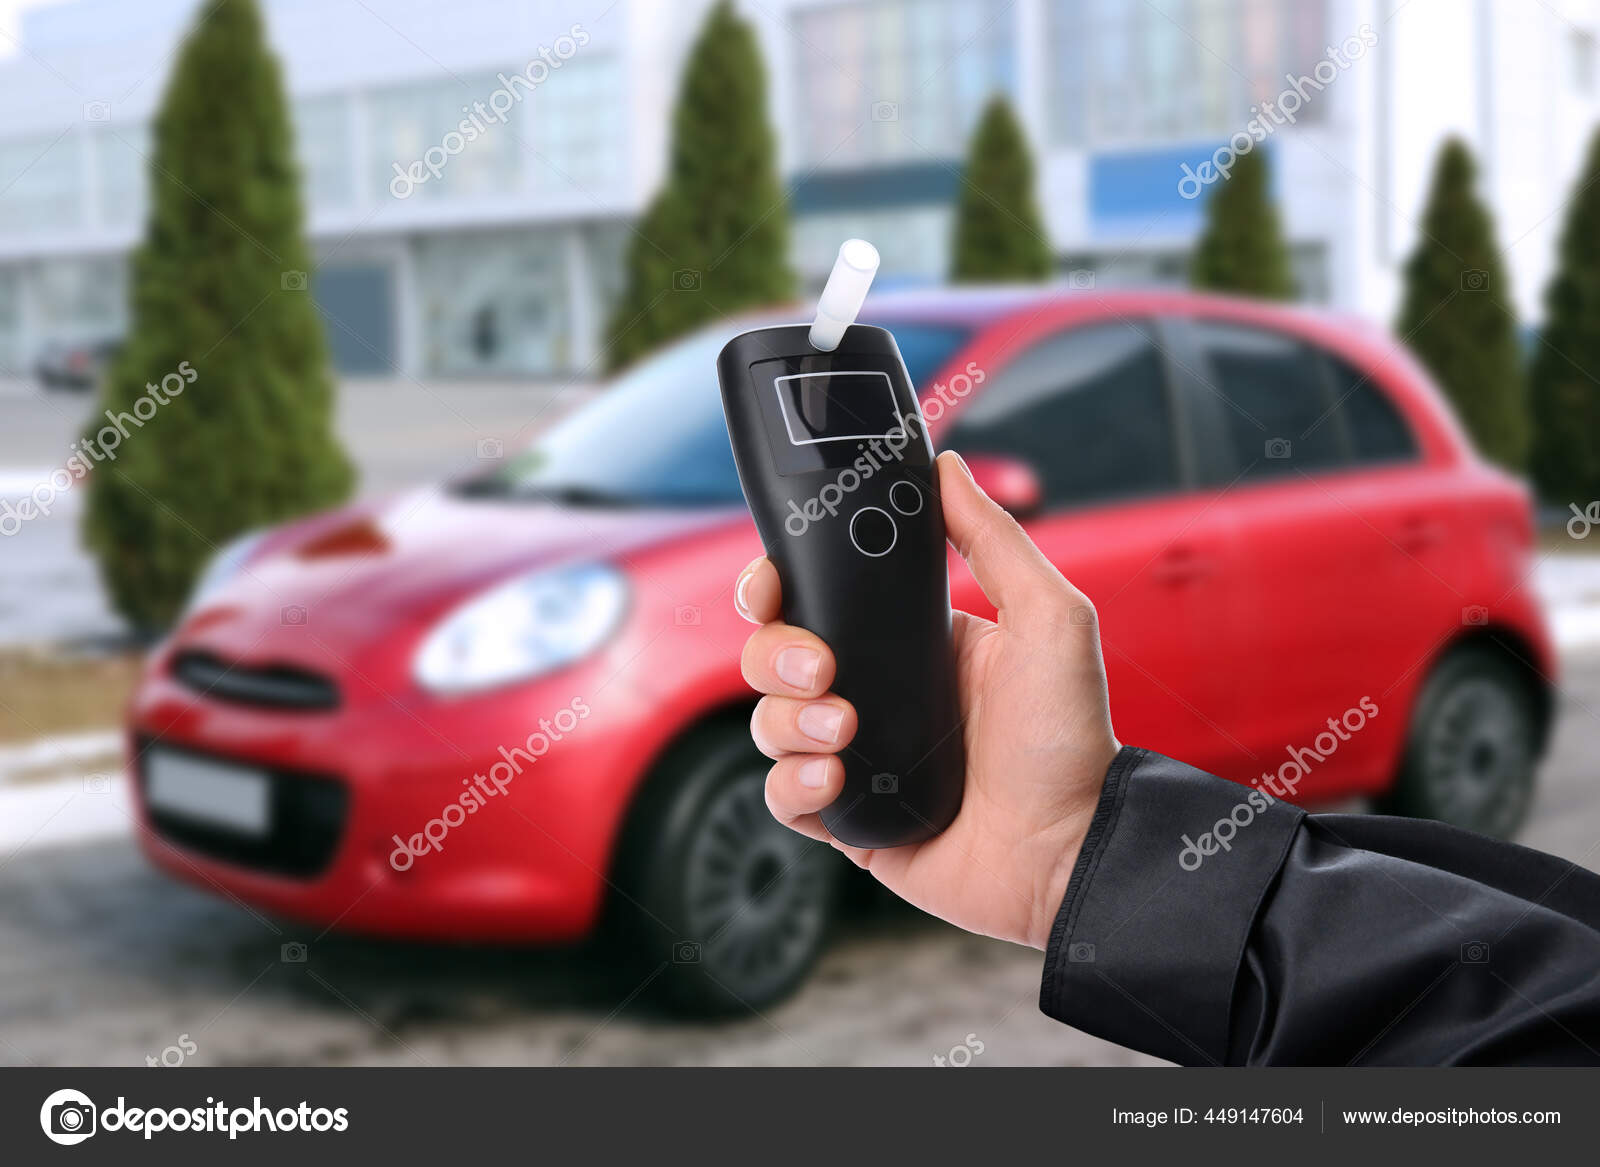 https://st2.depositphotos.com/16122460/44914/i/1600/depositphotos_449147604-stock-photo-police-officer-breathalyzer-car-outdoors.jpg